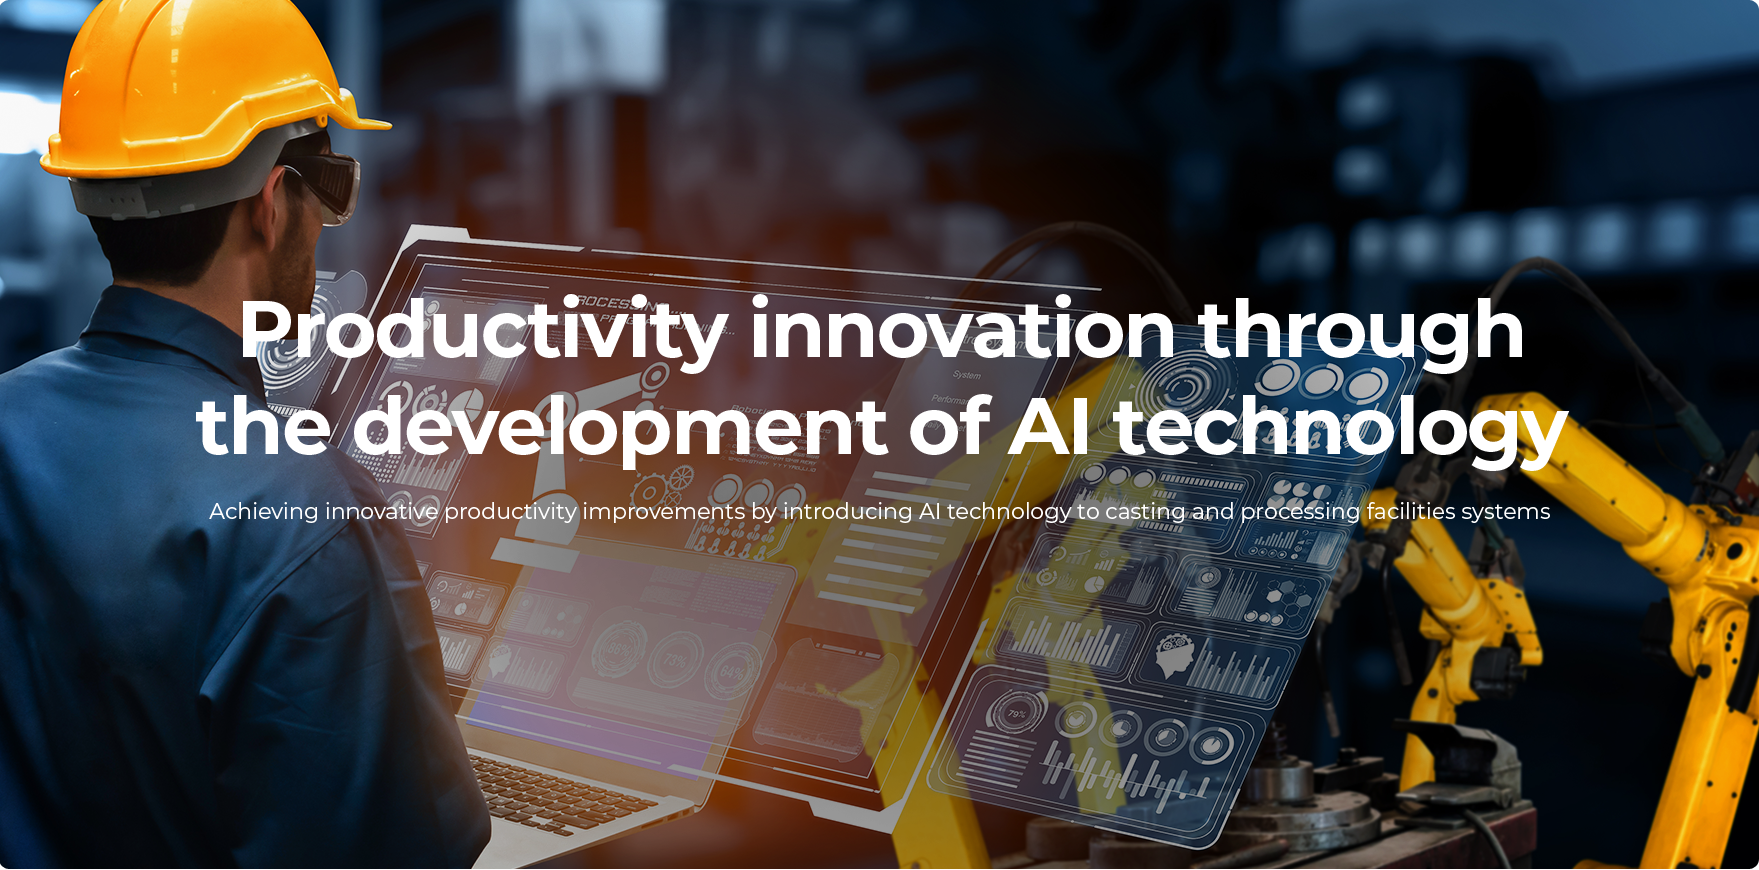 Productivity innovation through the development of AI technology